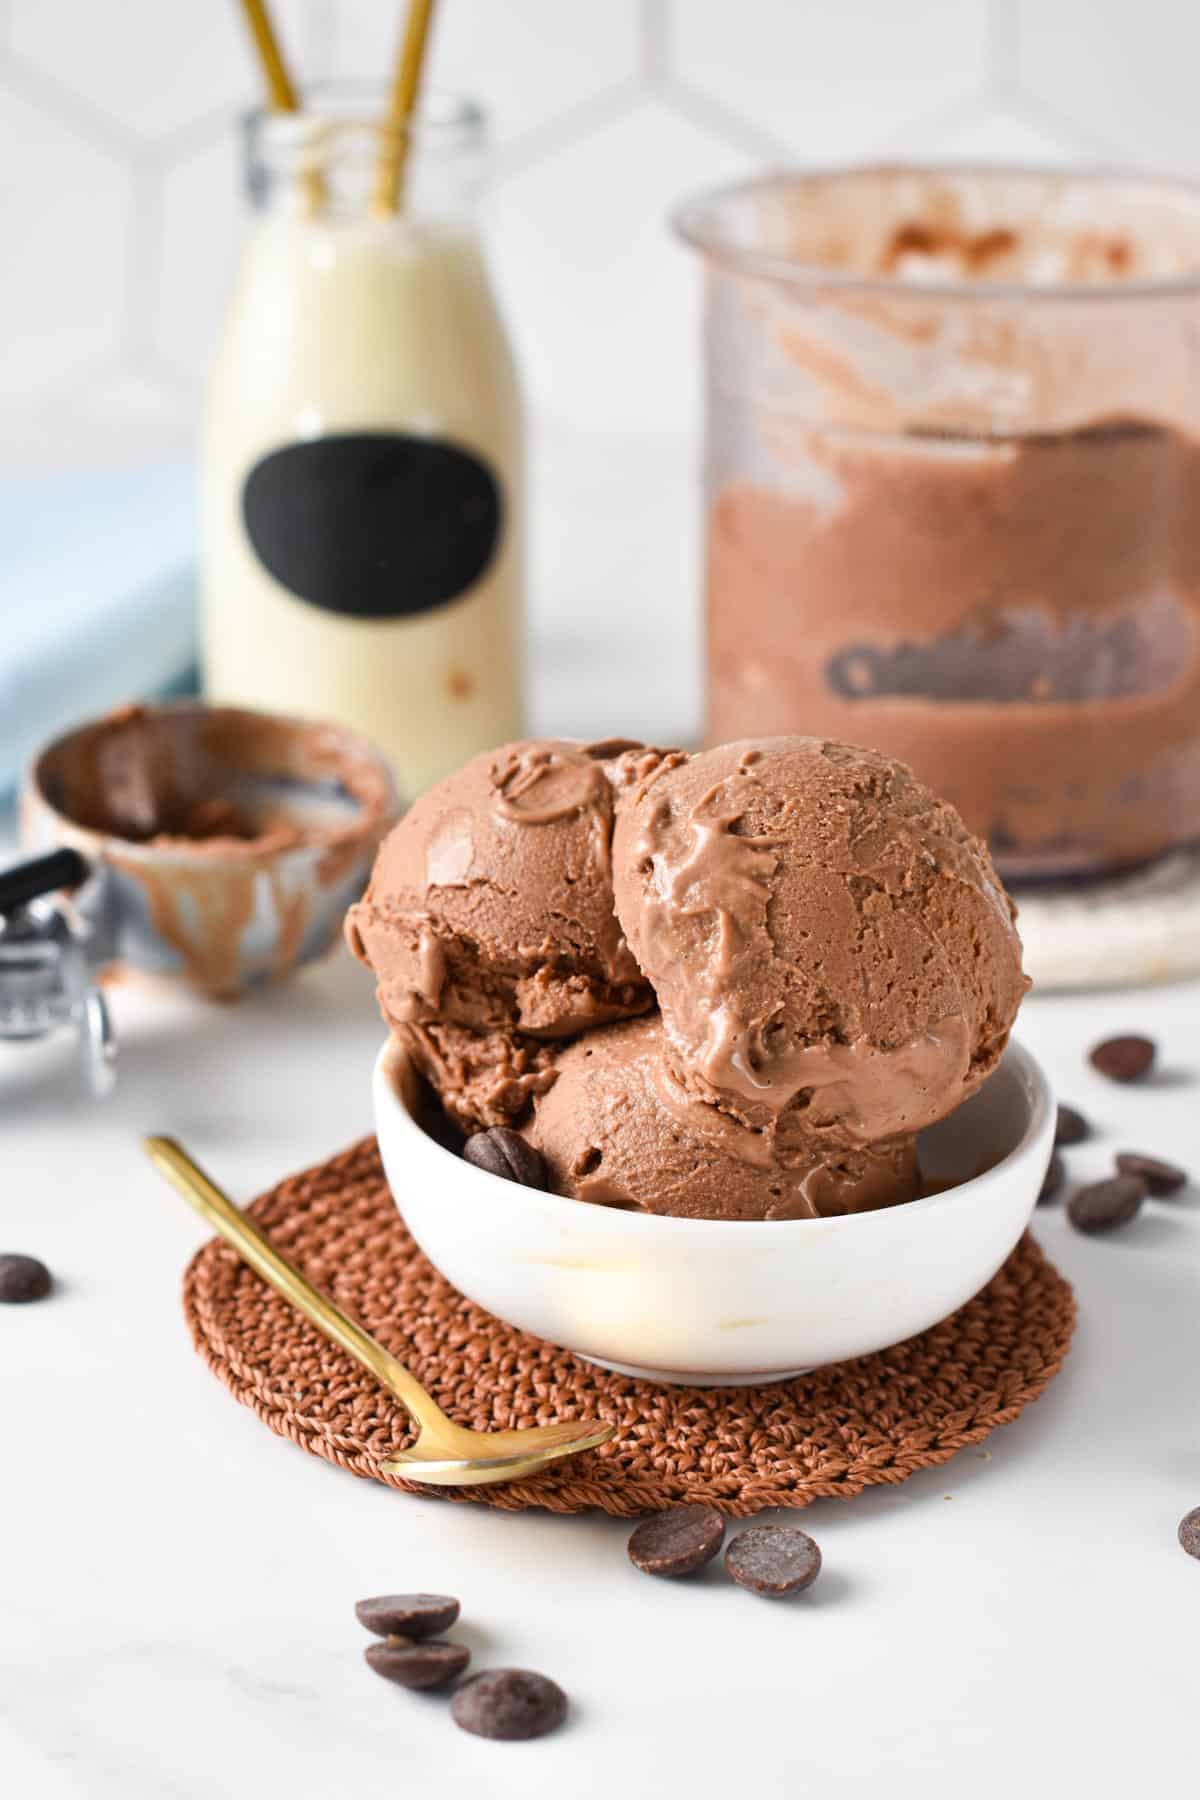 Ninja Creami Cereal Milk Ice Cream - I Dream of Ice Cream